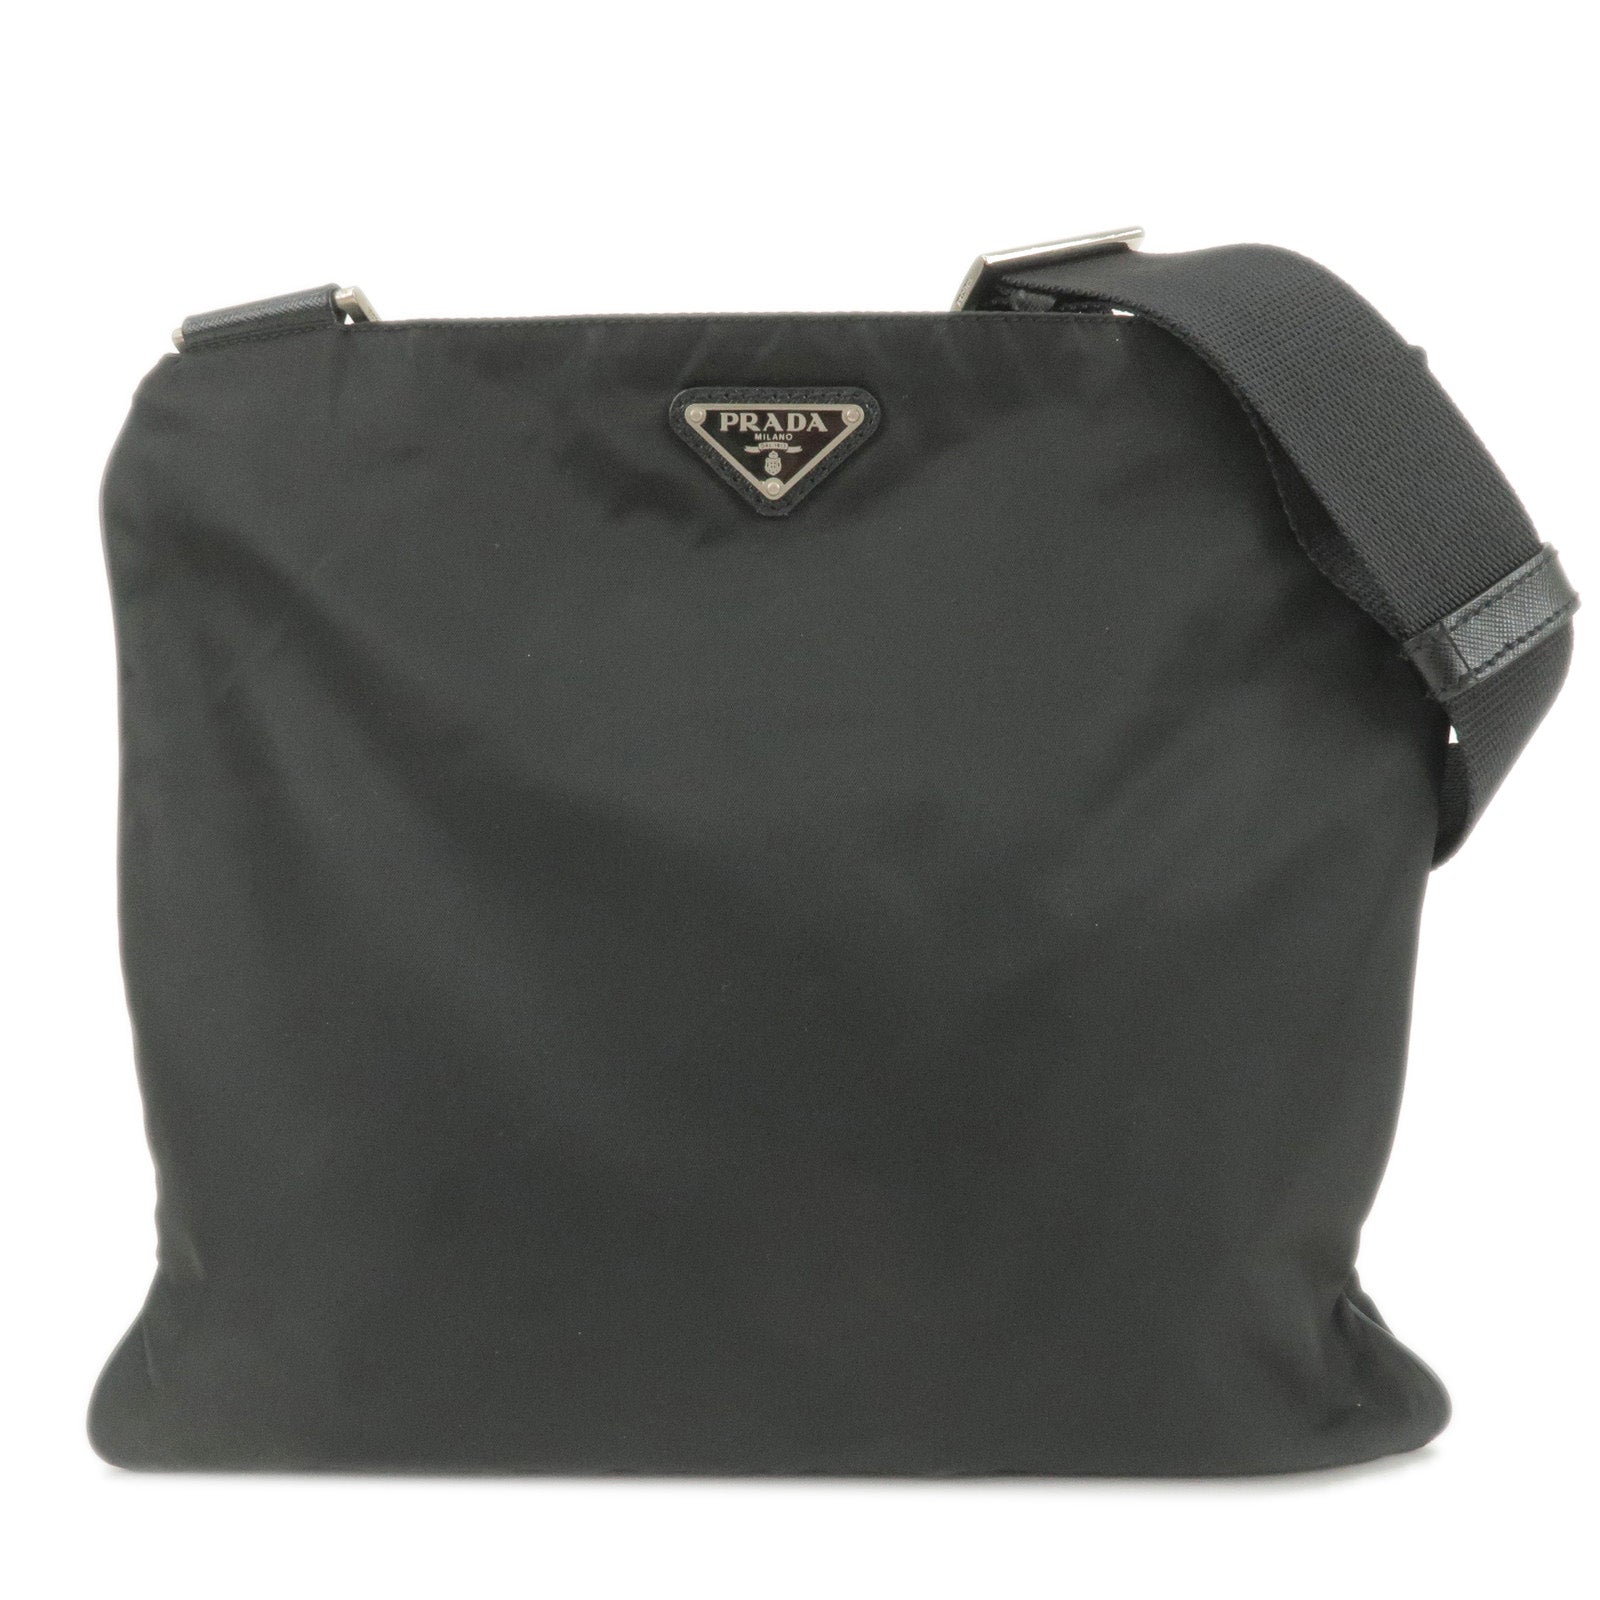 PRADA-Nylon-Leather-Shoulder-Bag-Crossbody-Bag-NERO-Black